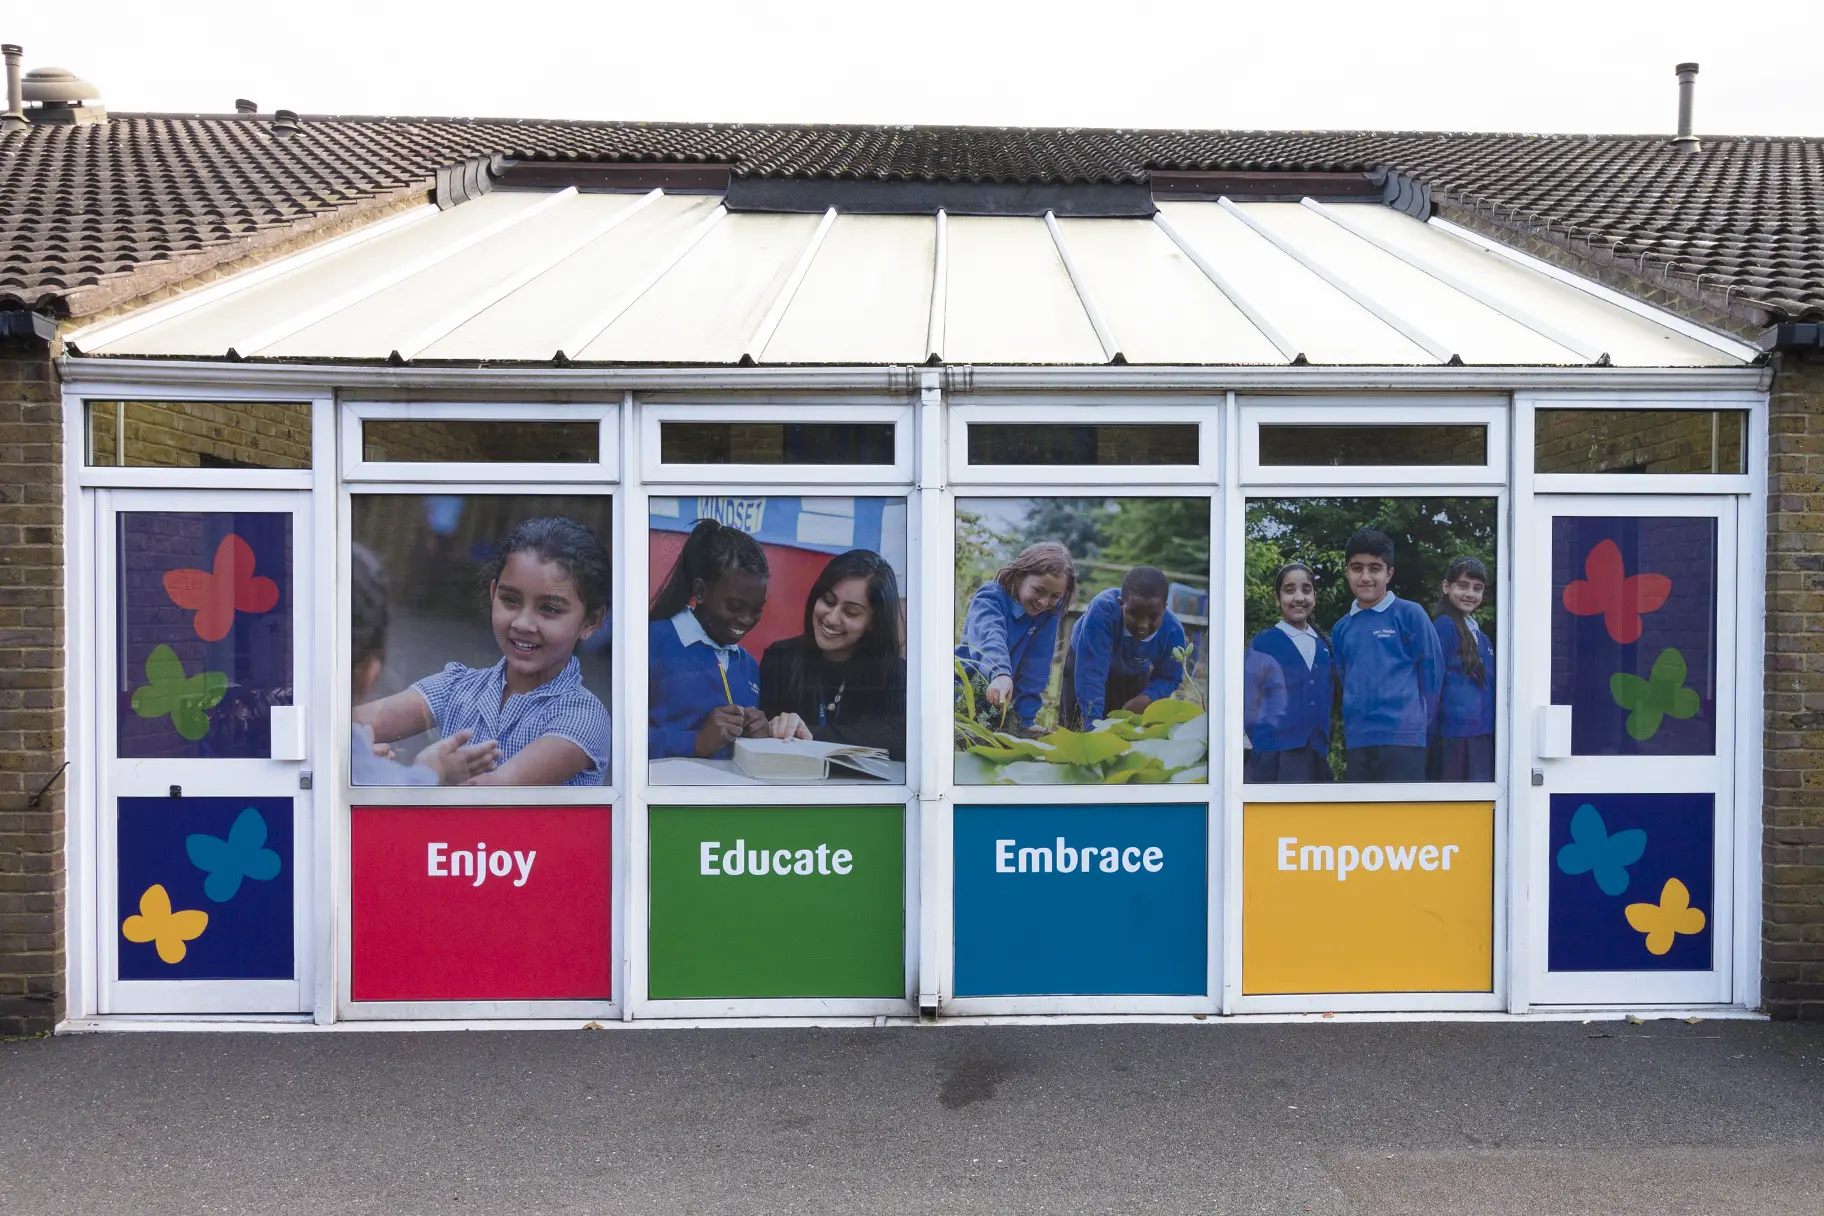 Bespoke school pupil photography for external doors and Wall Art